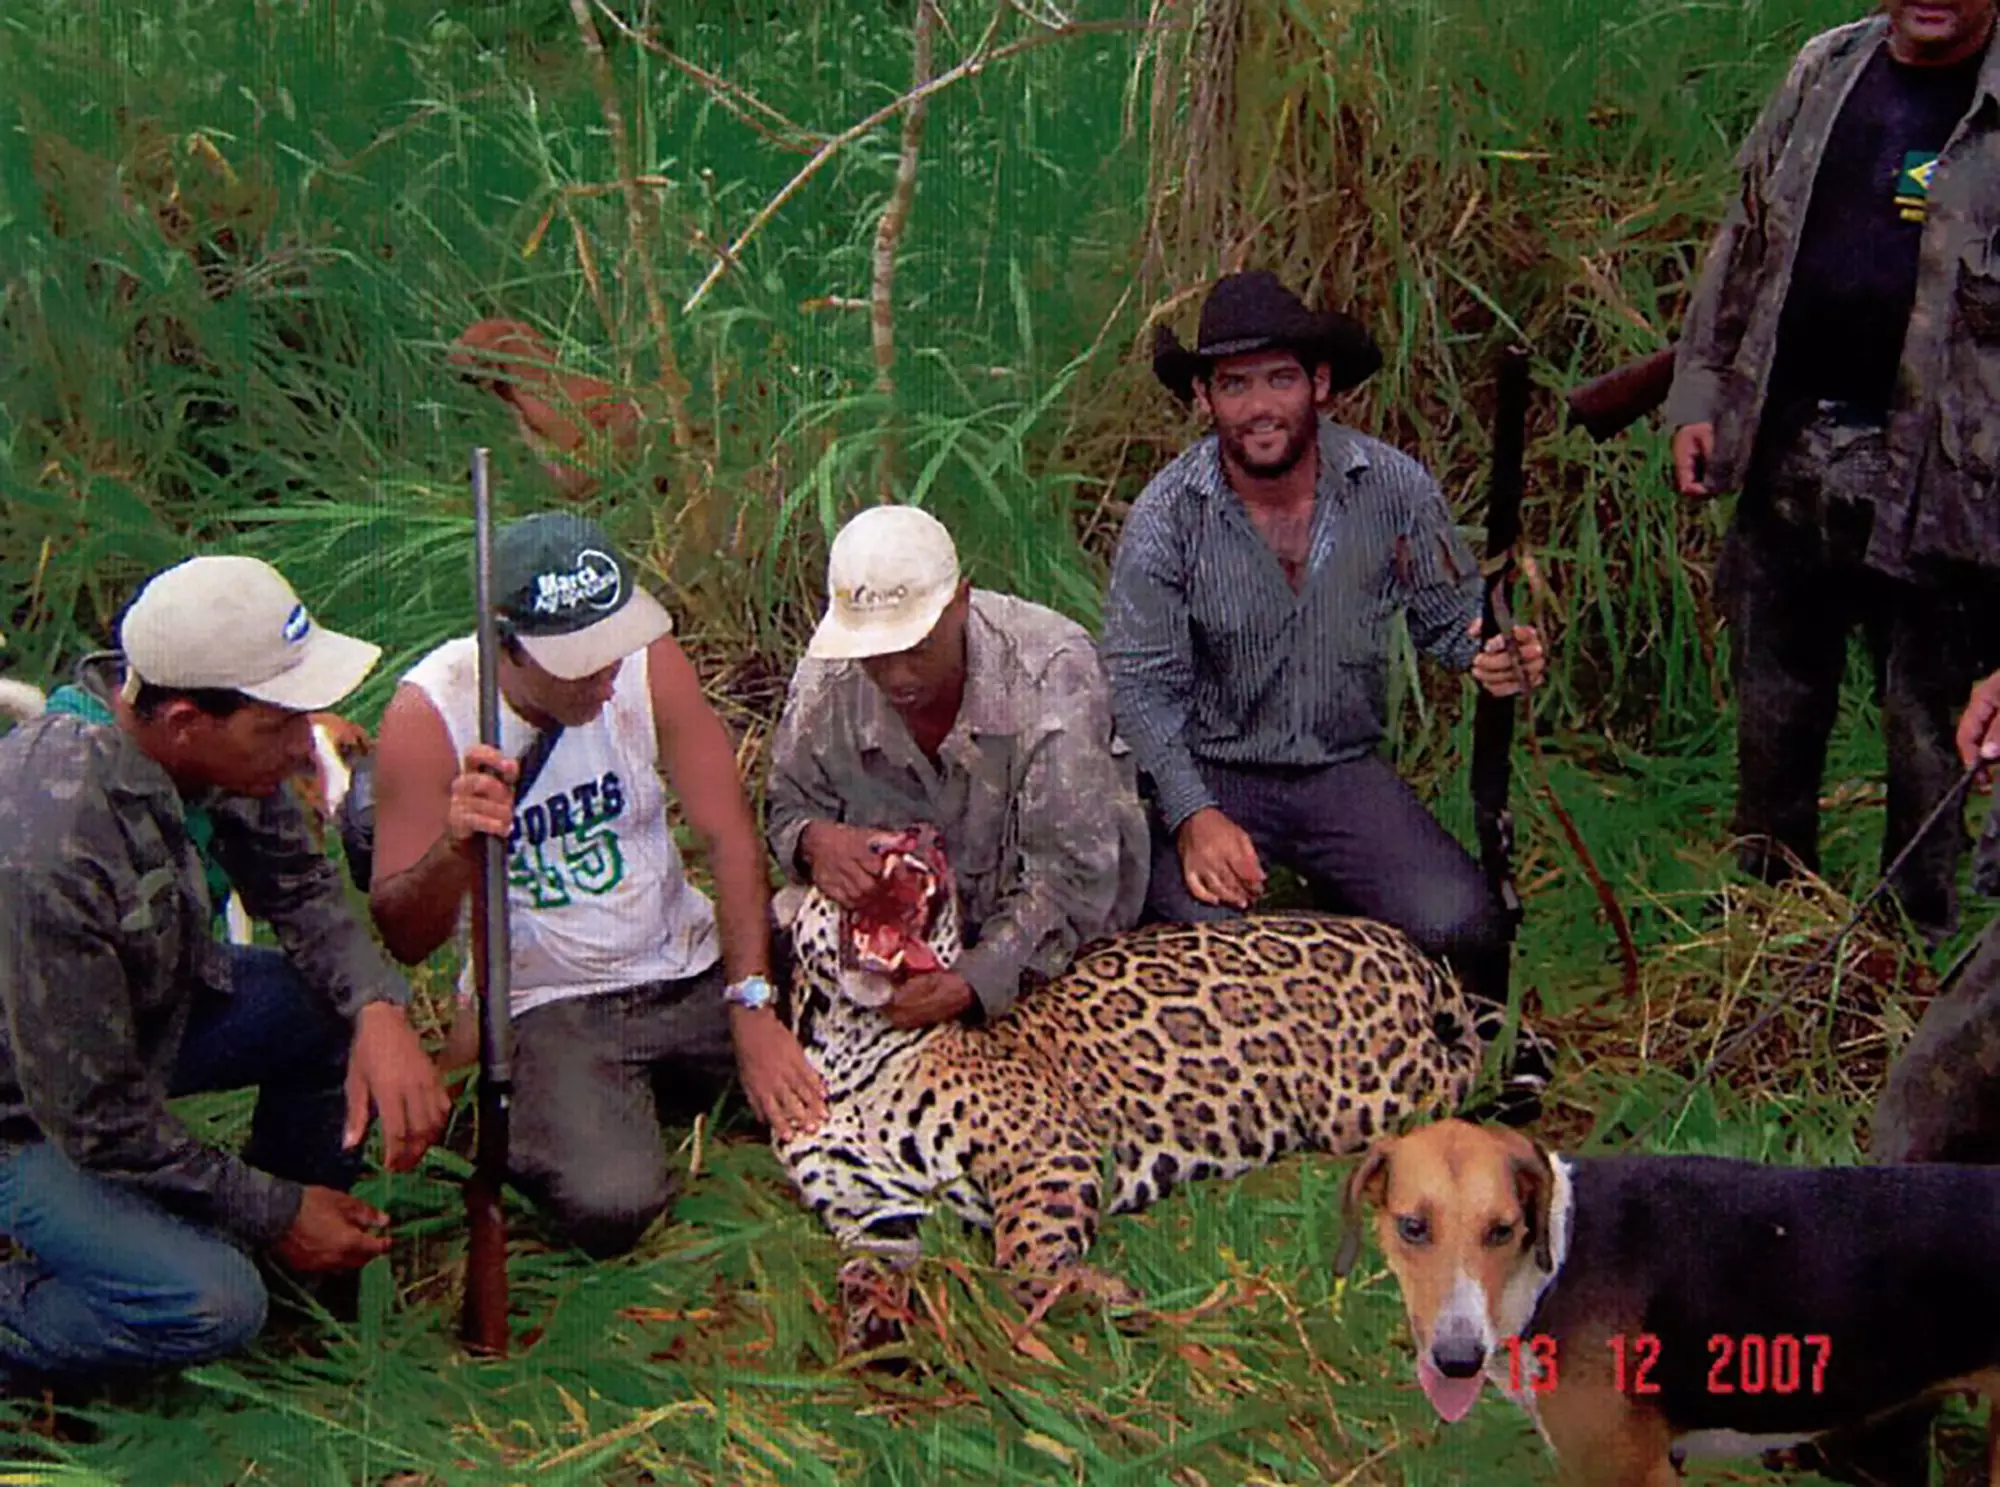 The poachers with a killed jaguar.